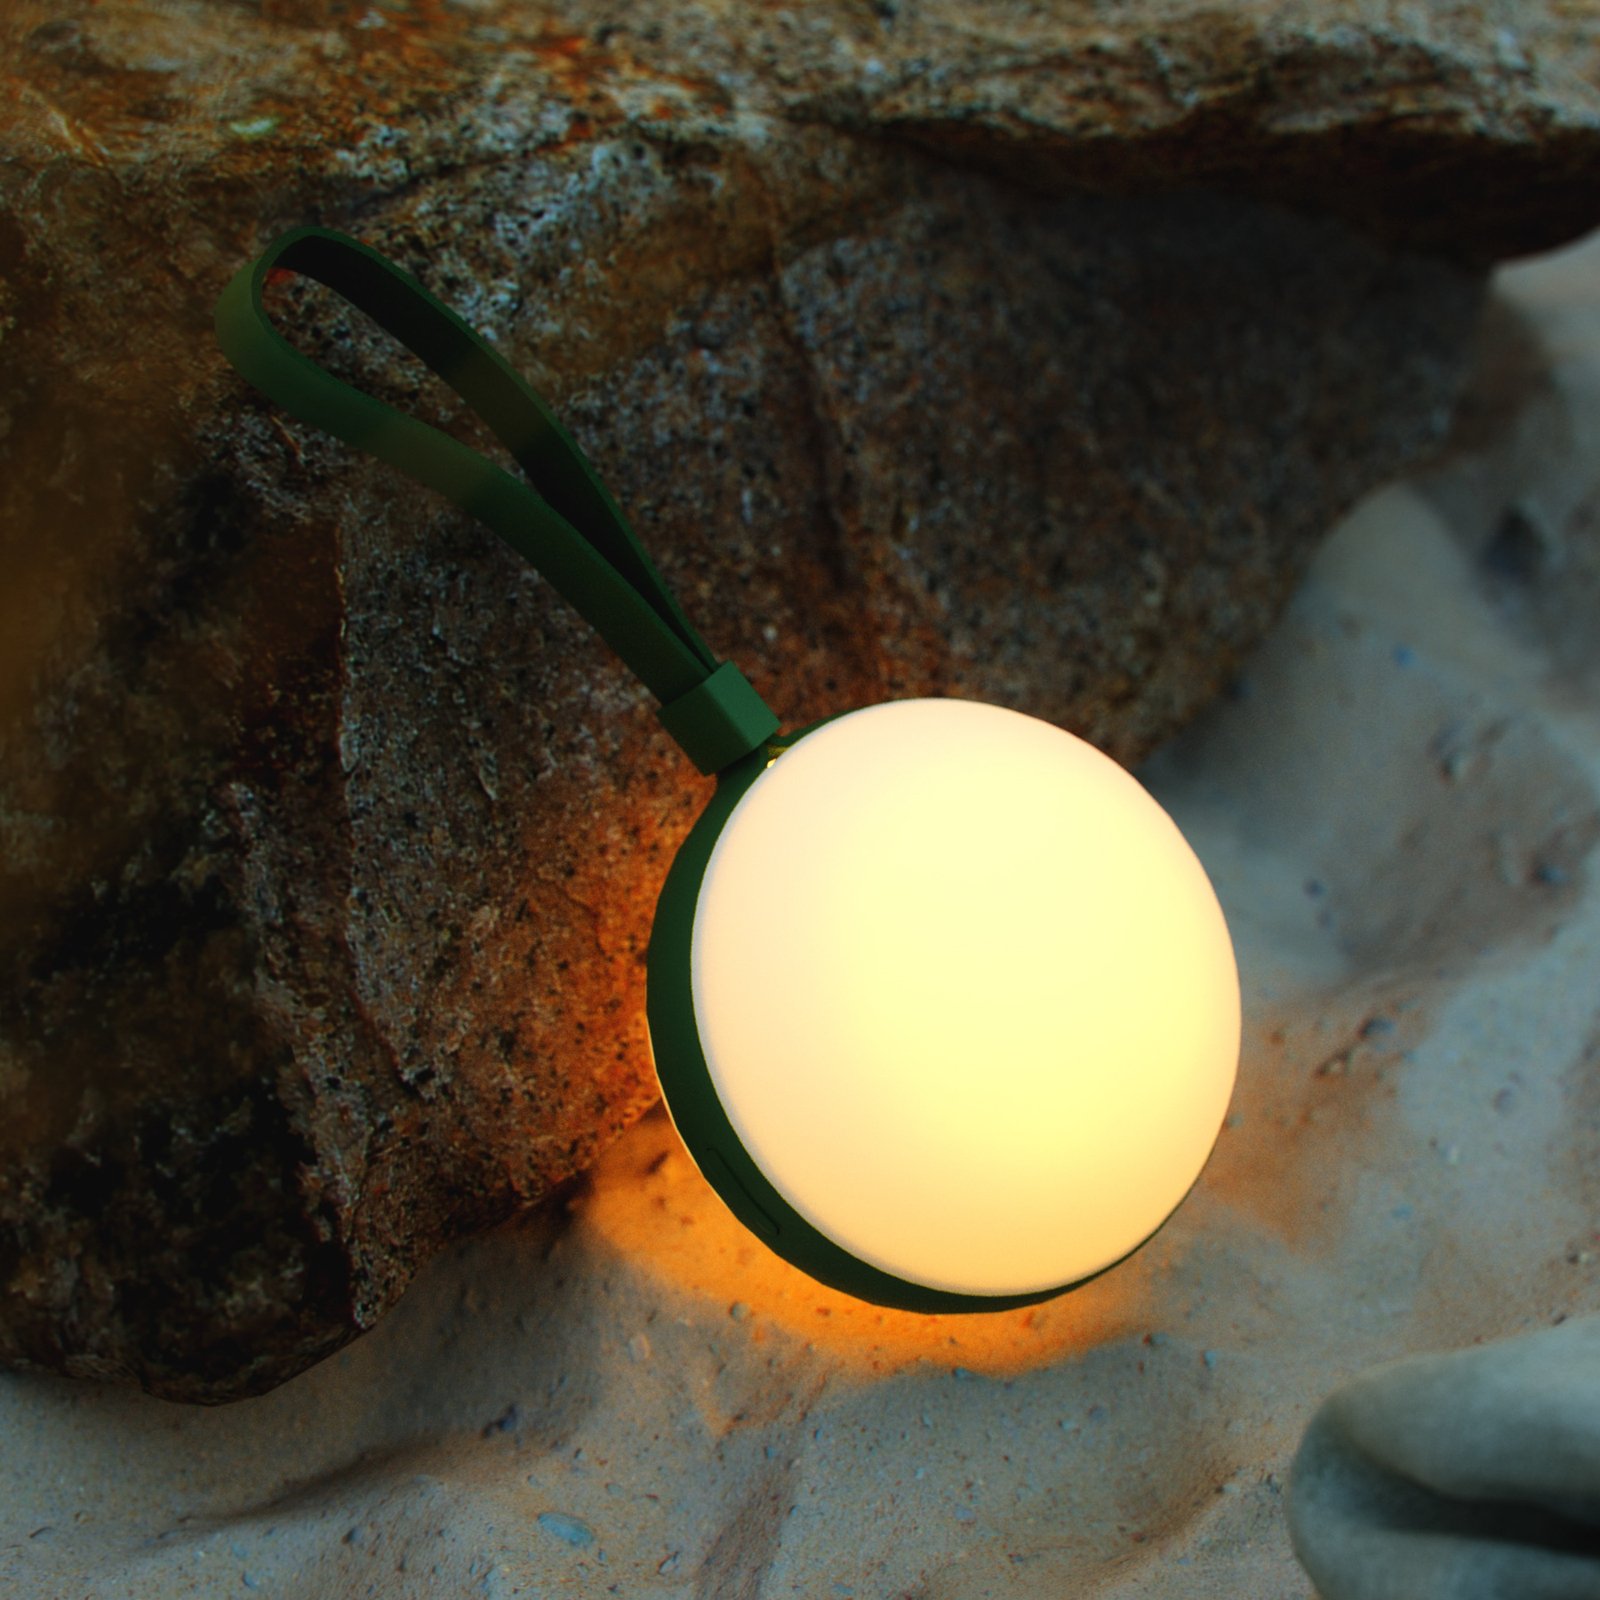 LED buitenlamp Bring to go Ø 12 cm wit/groen